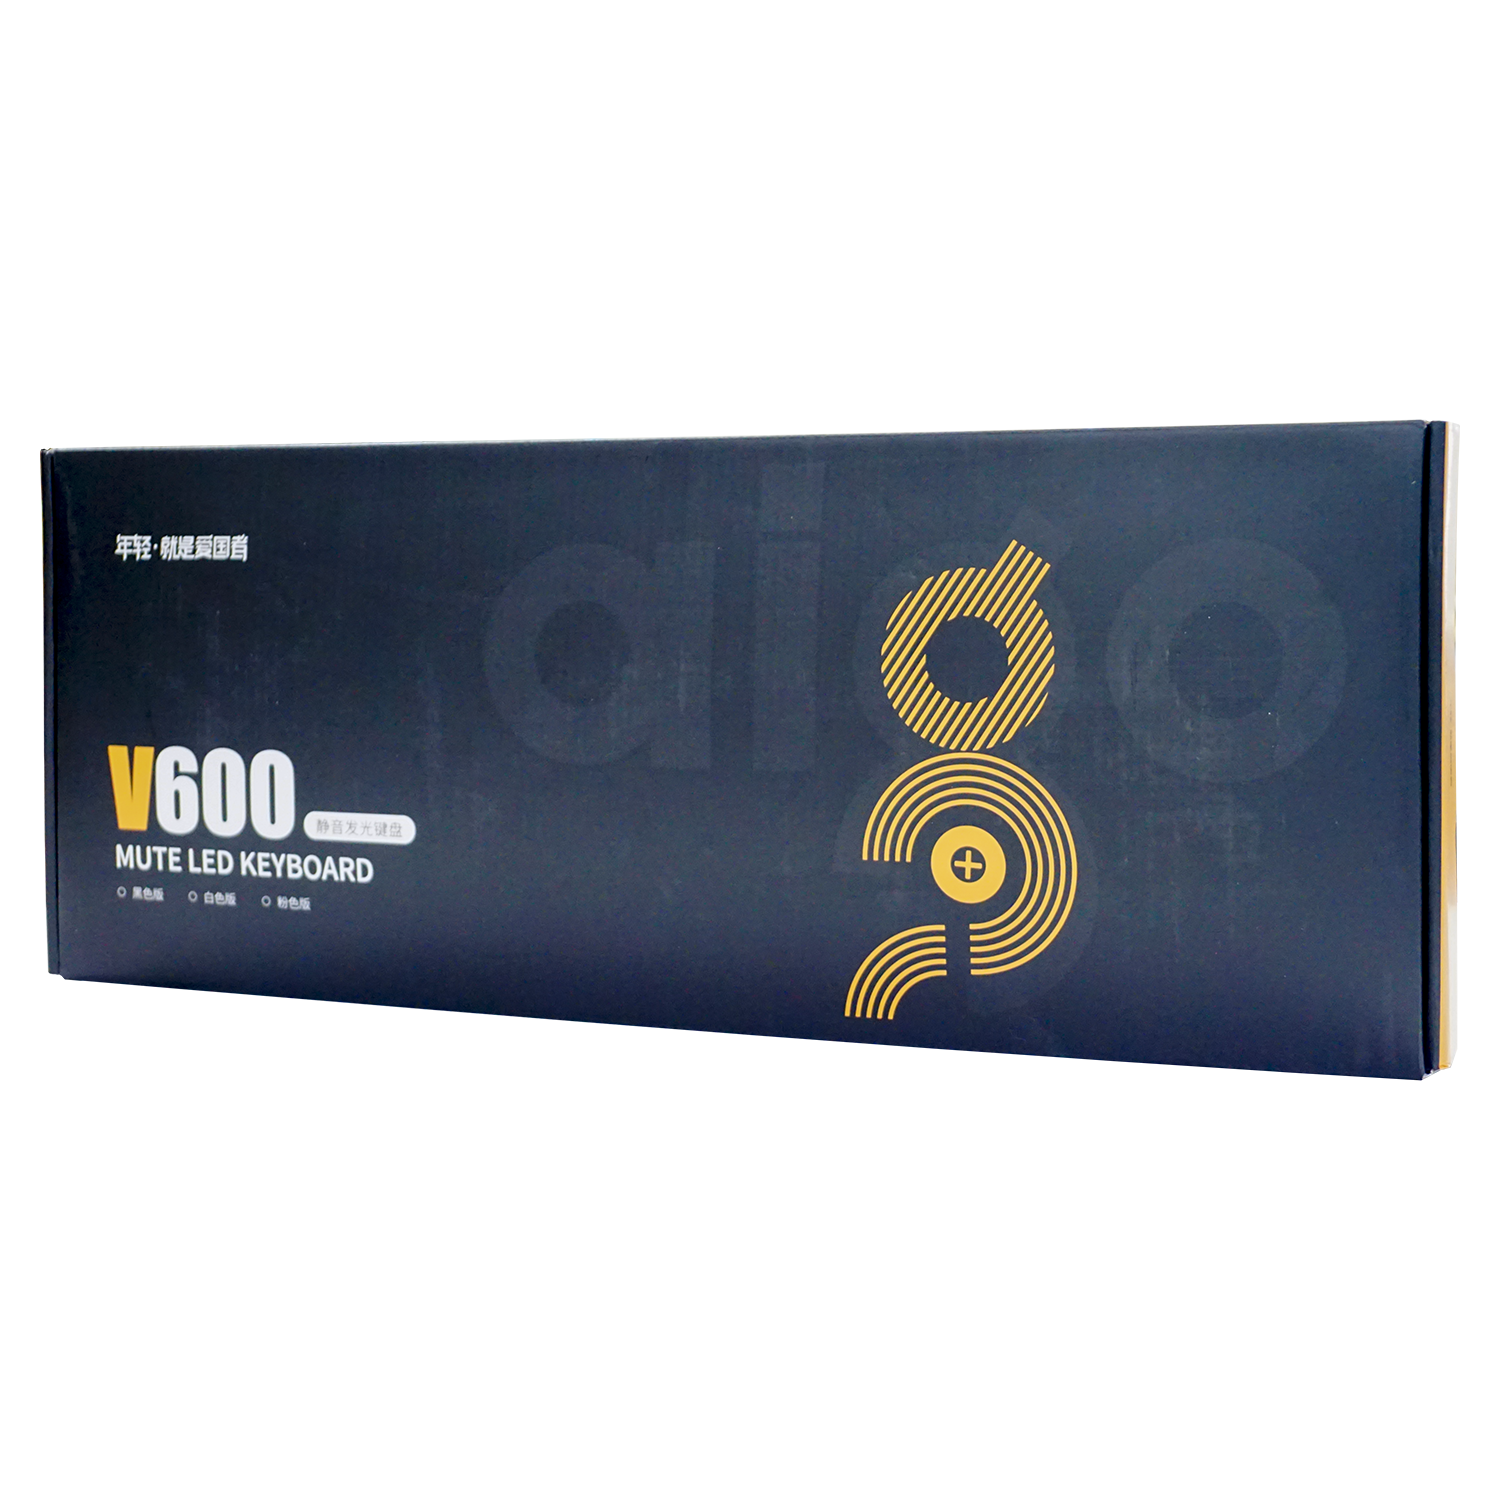 Teclado Mecânico Aigo V600 - Silver (Mute LED Keyboard)